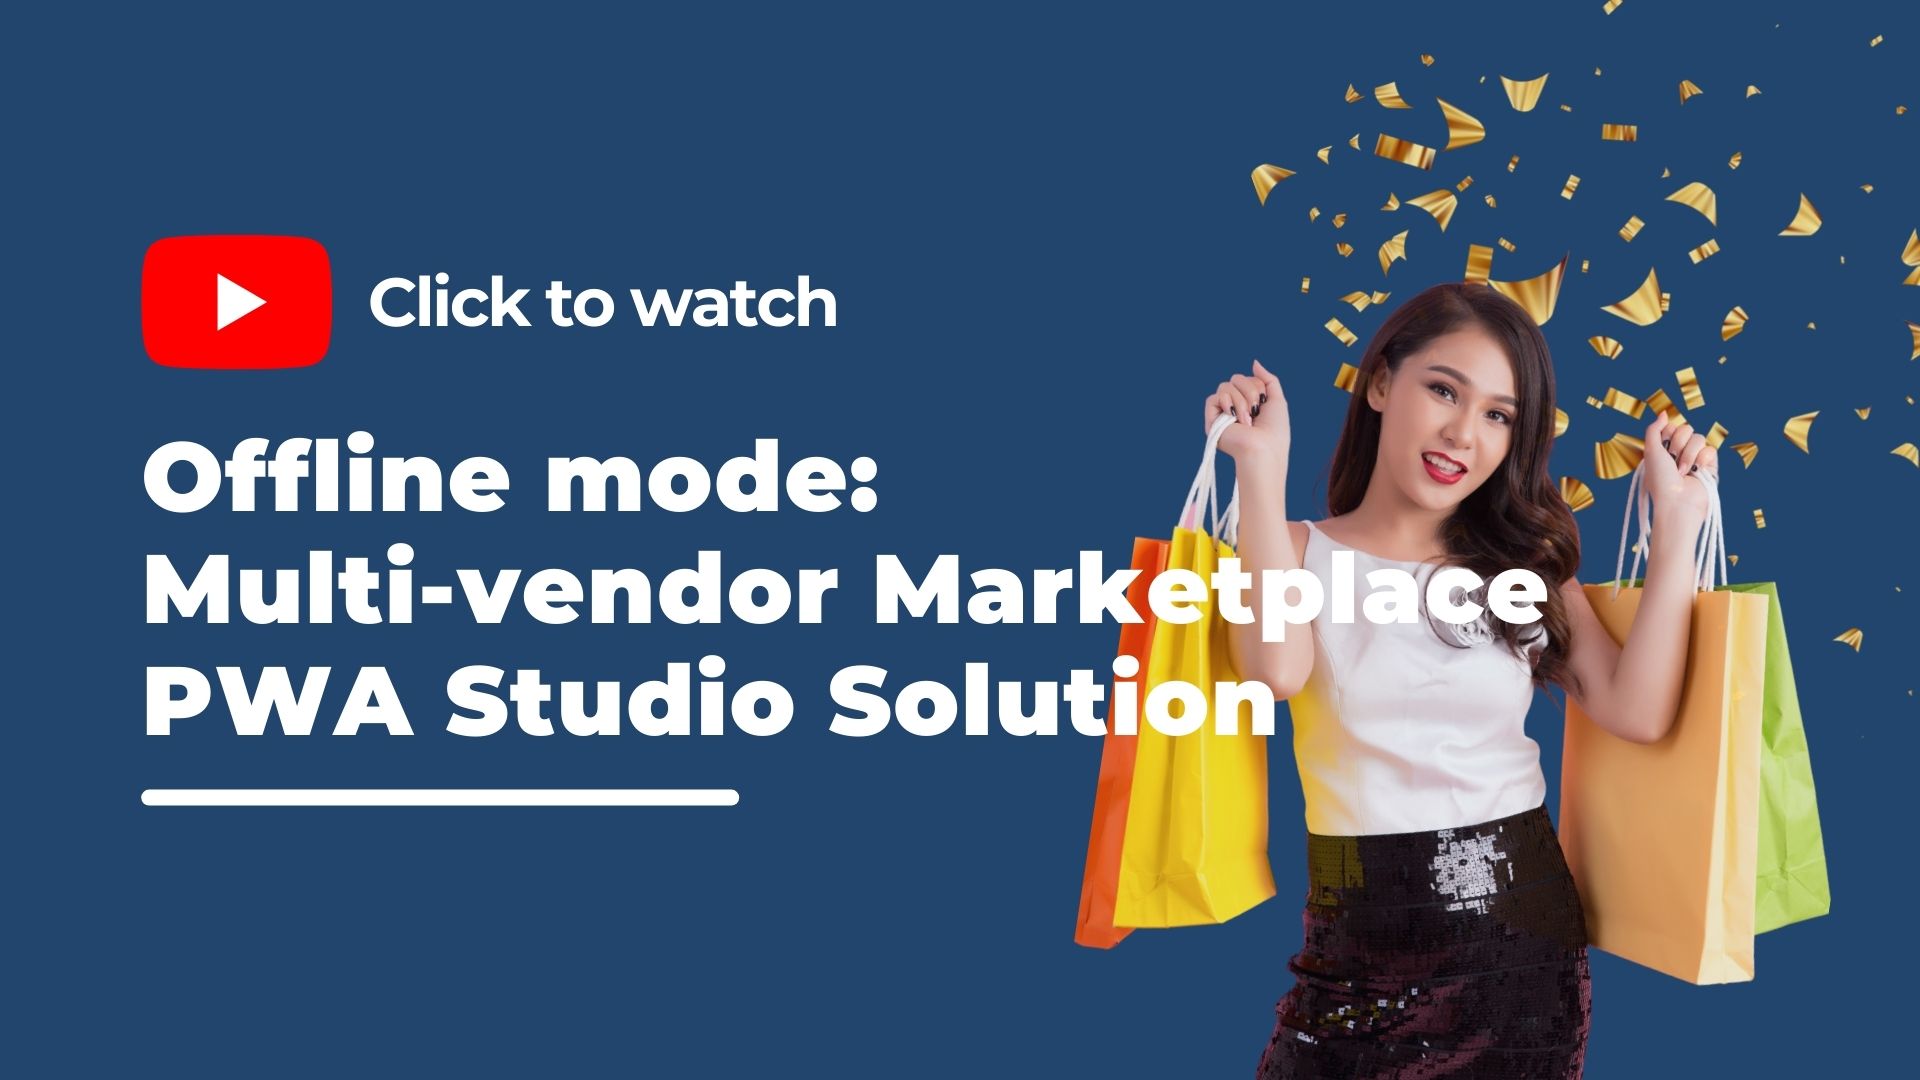 Magento 2 multivendor marketplace PWA studio - Offline mode